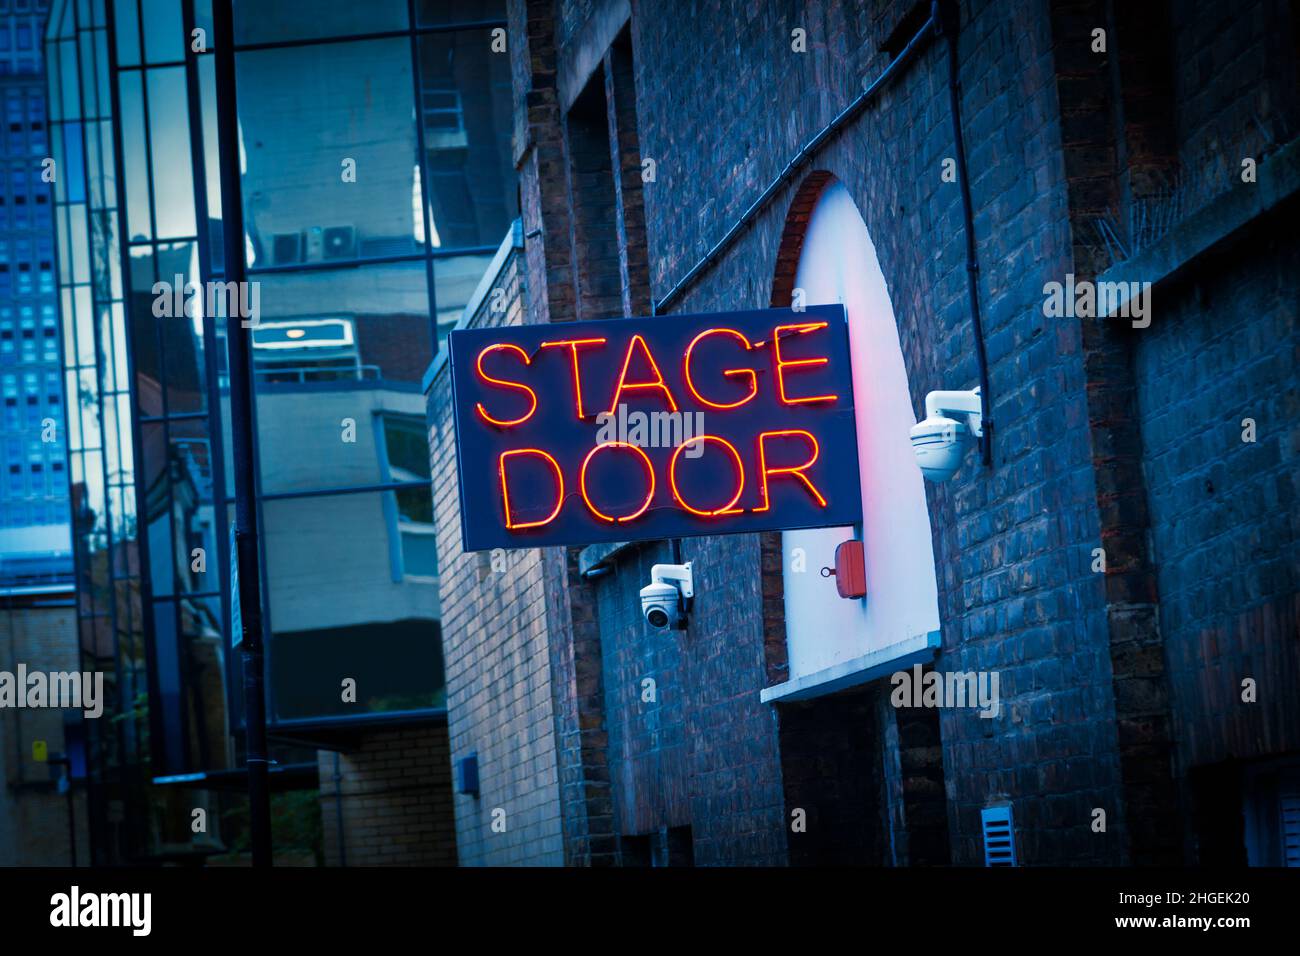 Stage door sign, london, uk Stock Photo